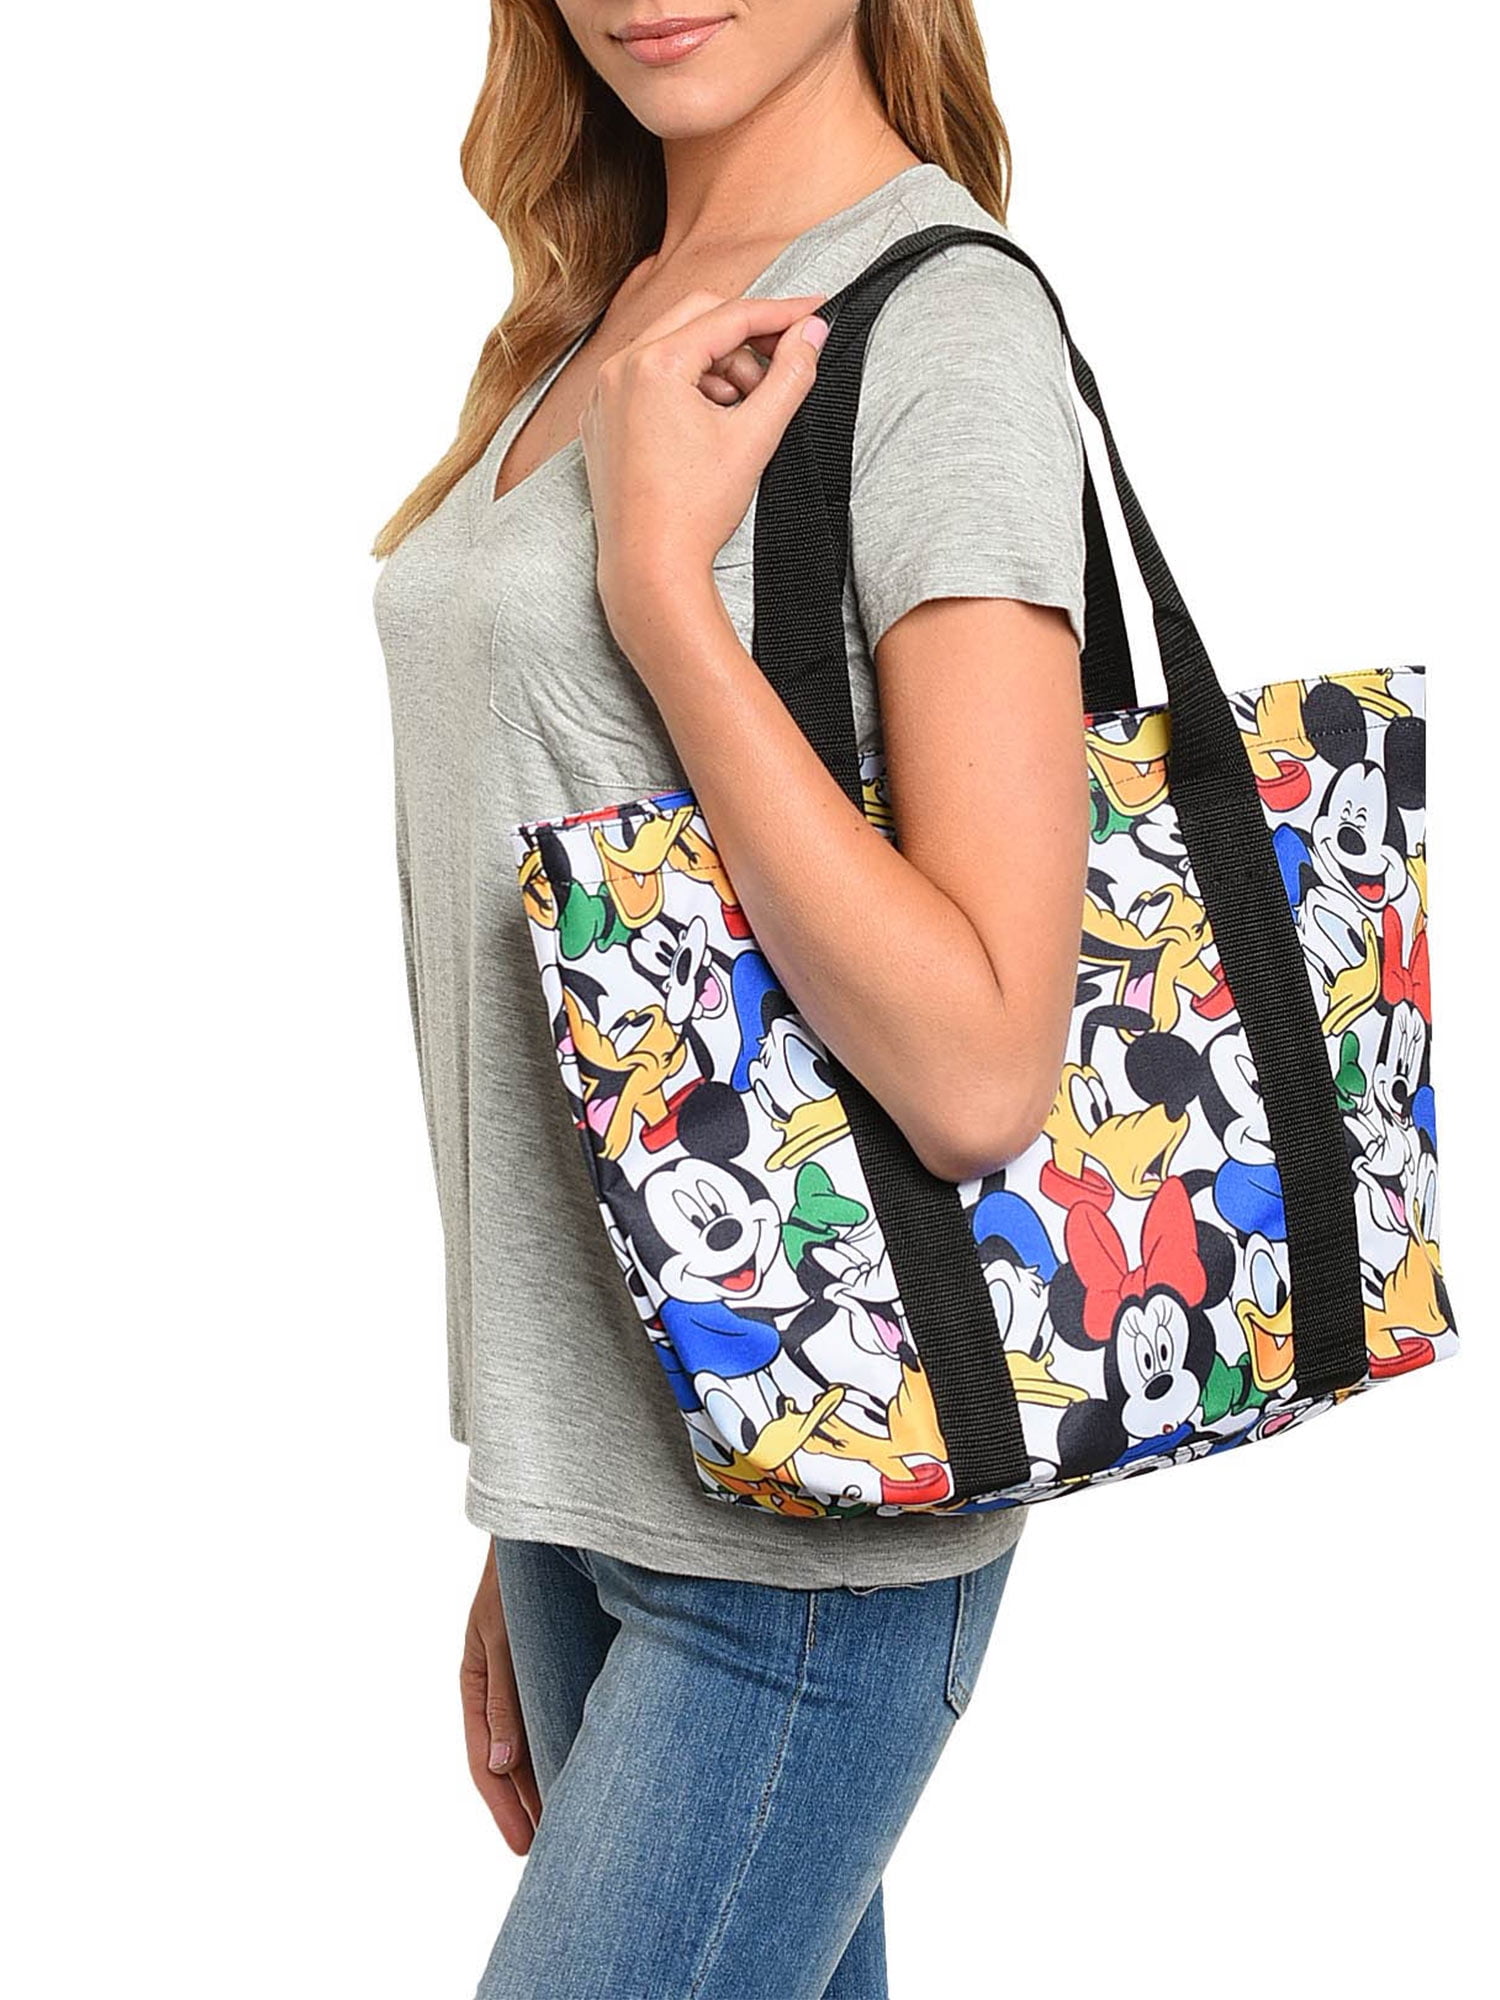 GIFT TOTE BAG! BRAND NEW Mickey Minnie Goofy Pluto Donald 12.5"x13"  SHOPPING